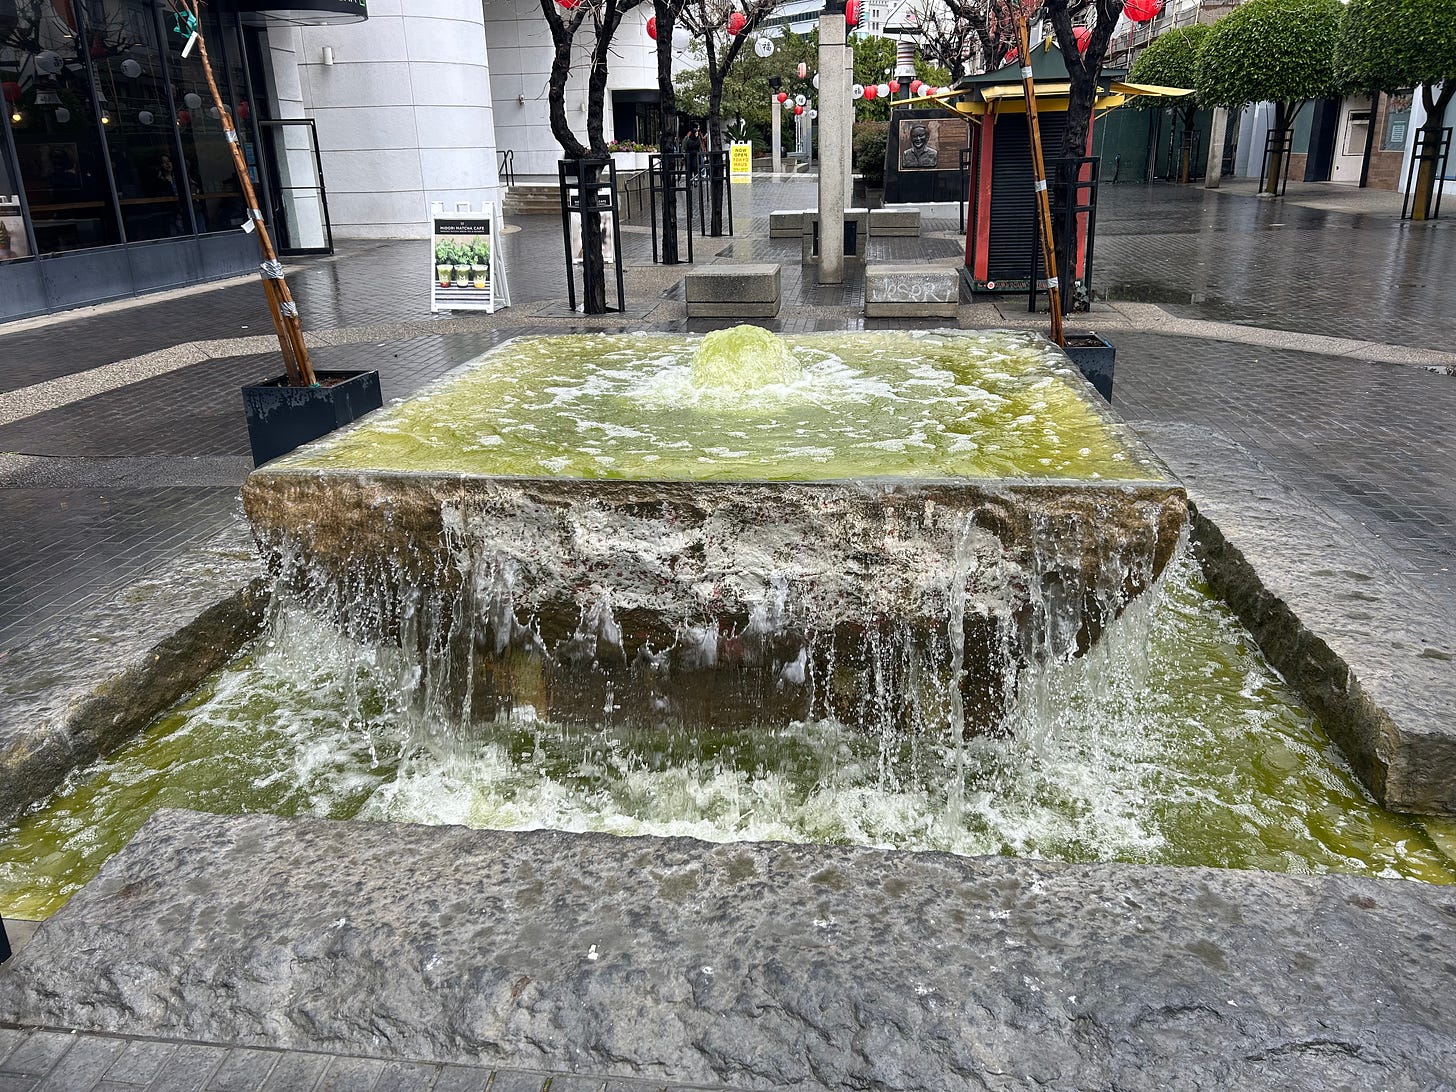 A ground fountain, square-shaped, emanating green foamy liquid in a concrete plaza